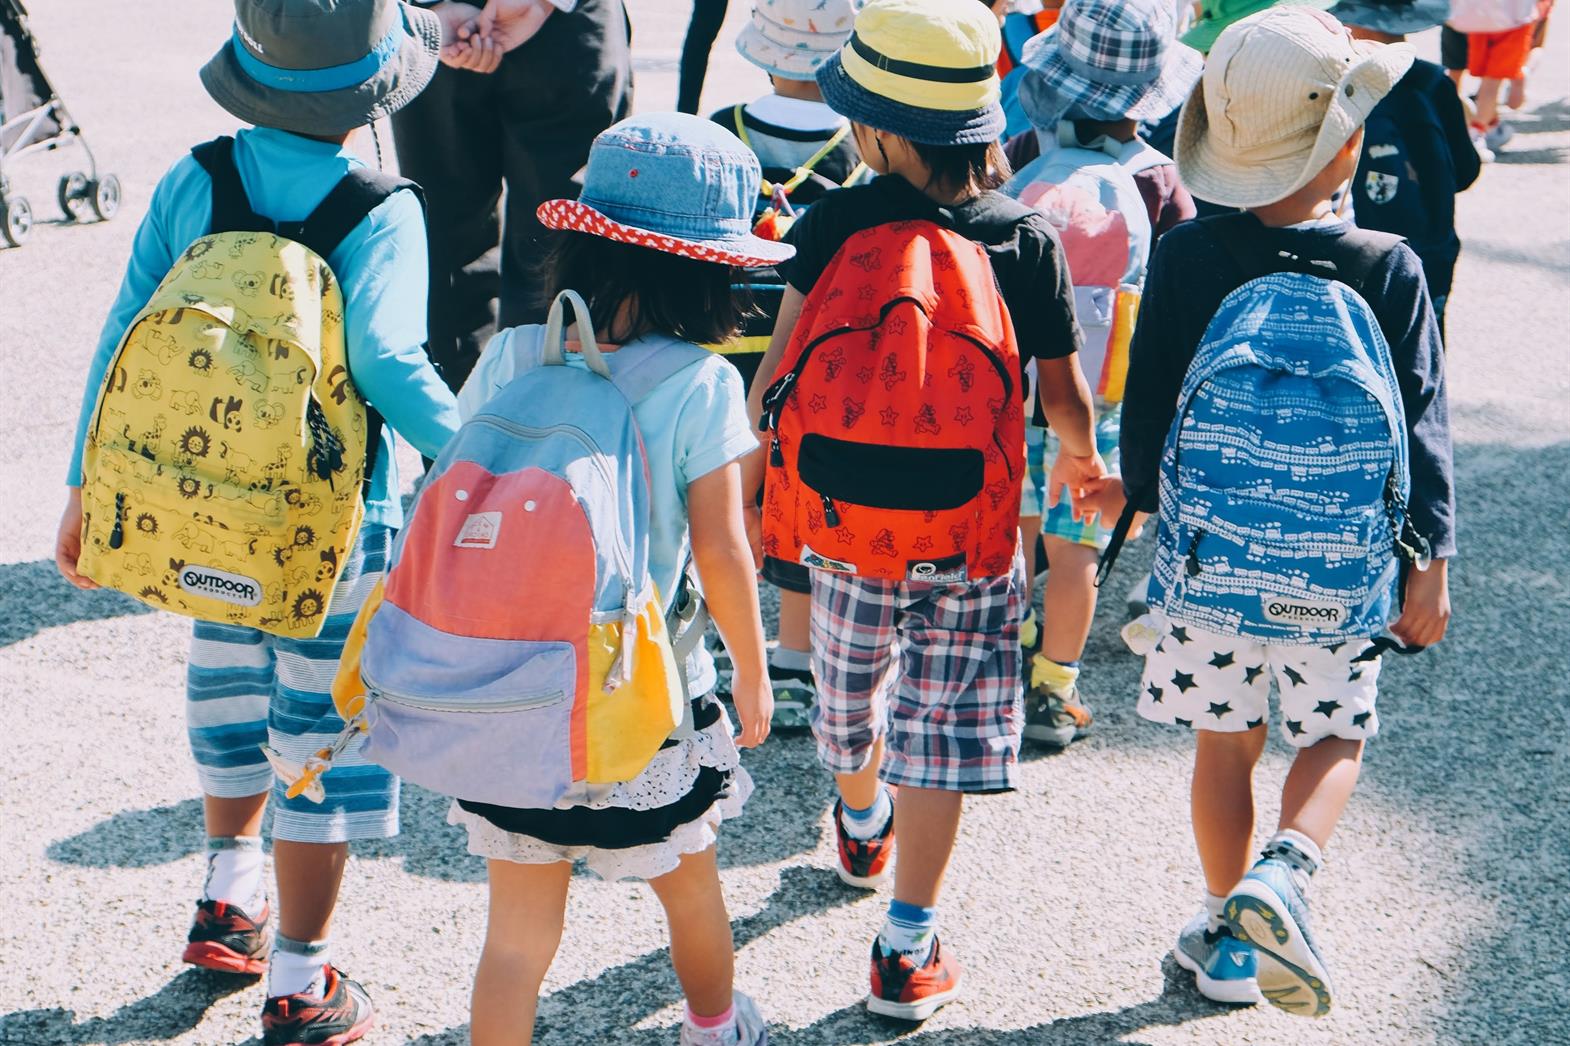 Group of children wearing backpacks walking away